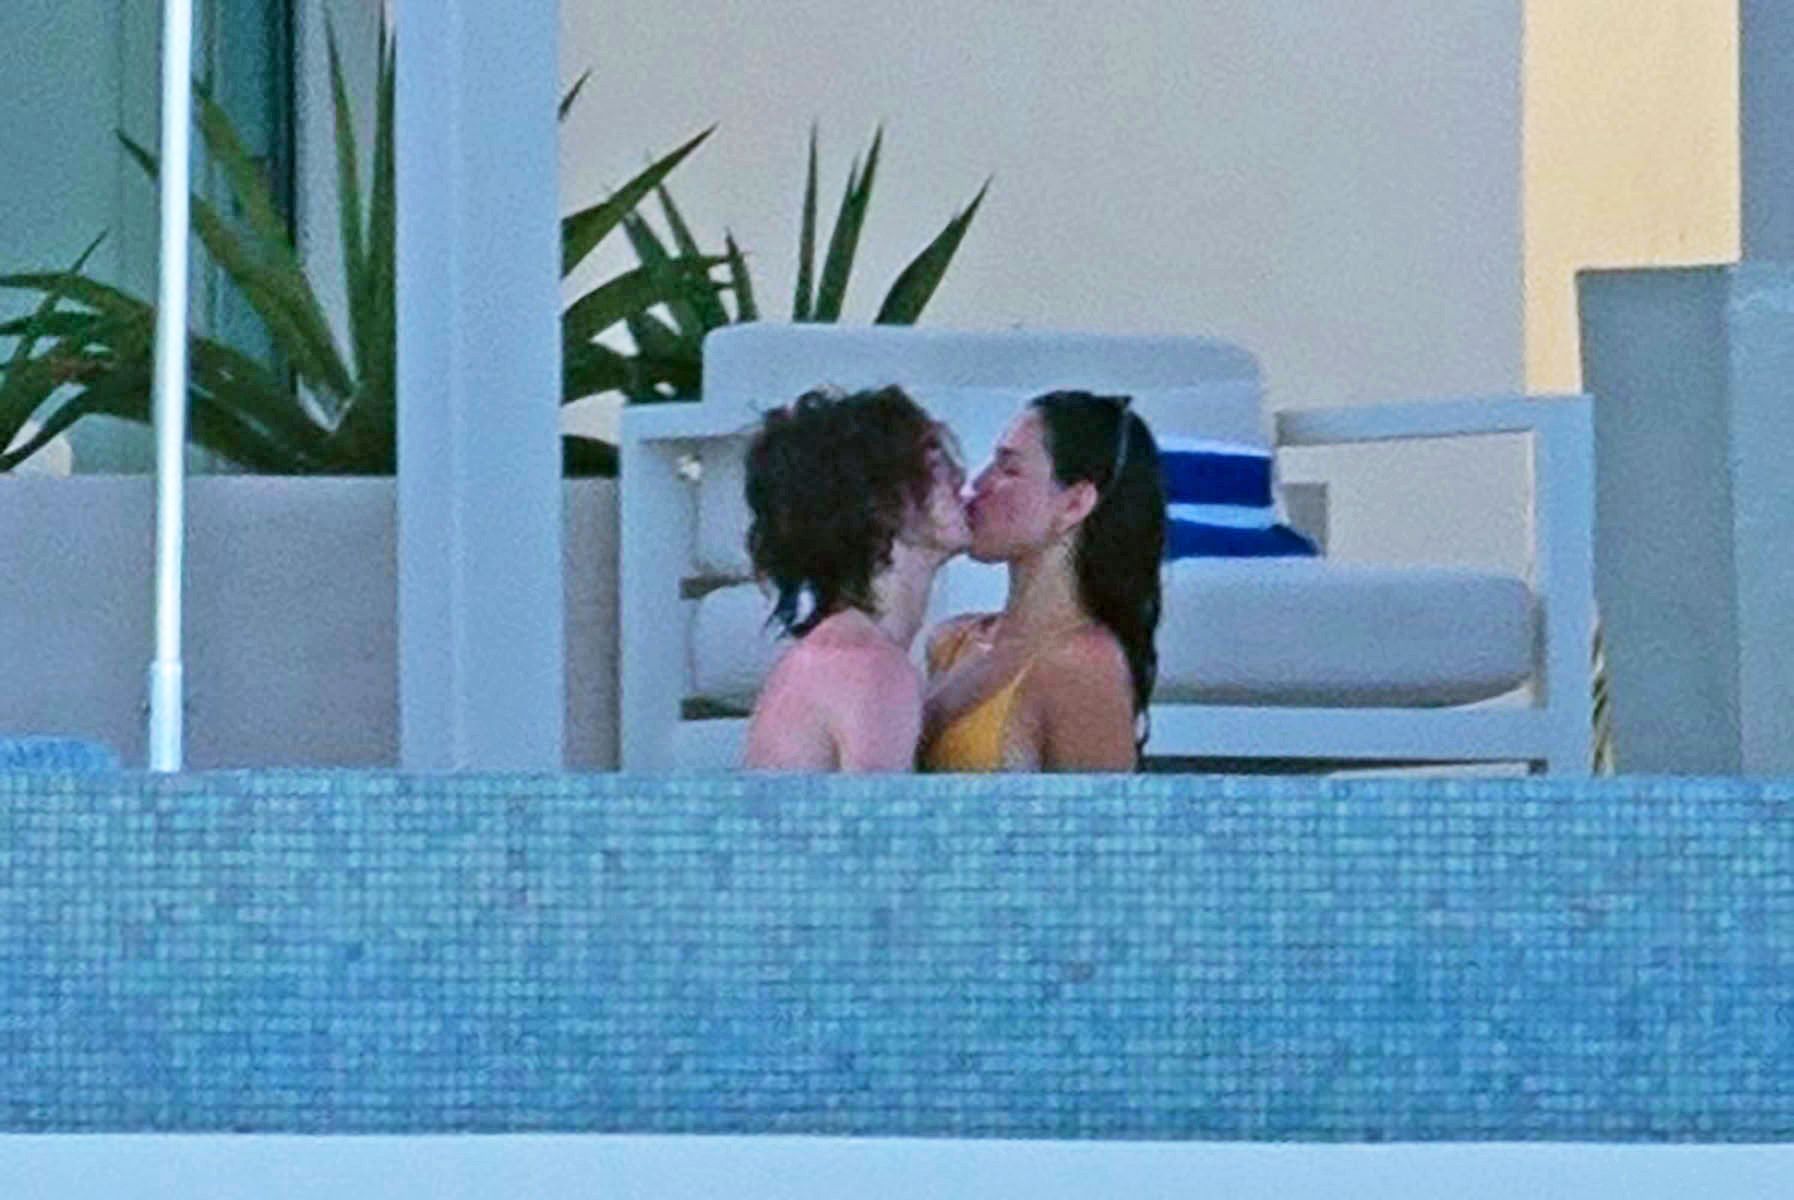 Timothée Chalamet and Eiza González Passionately Kiss in Pool image photo